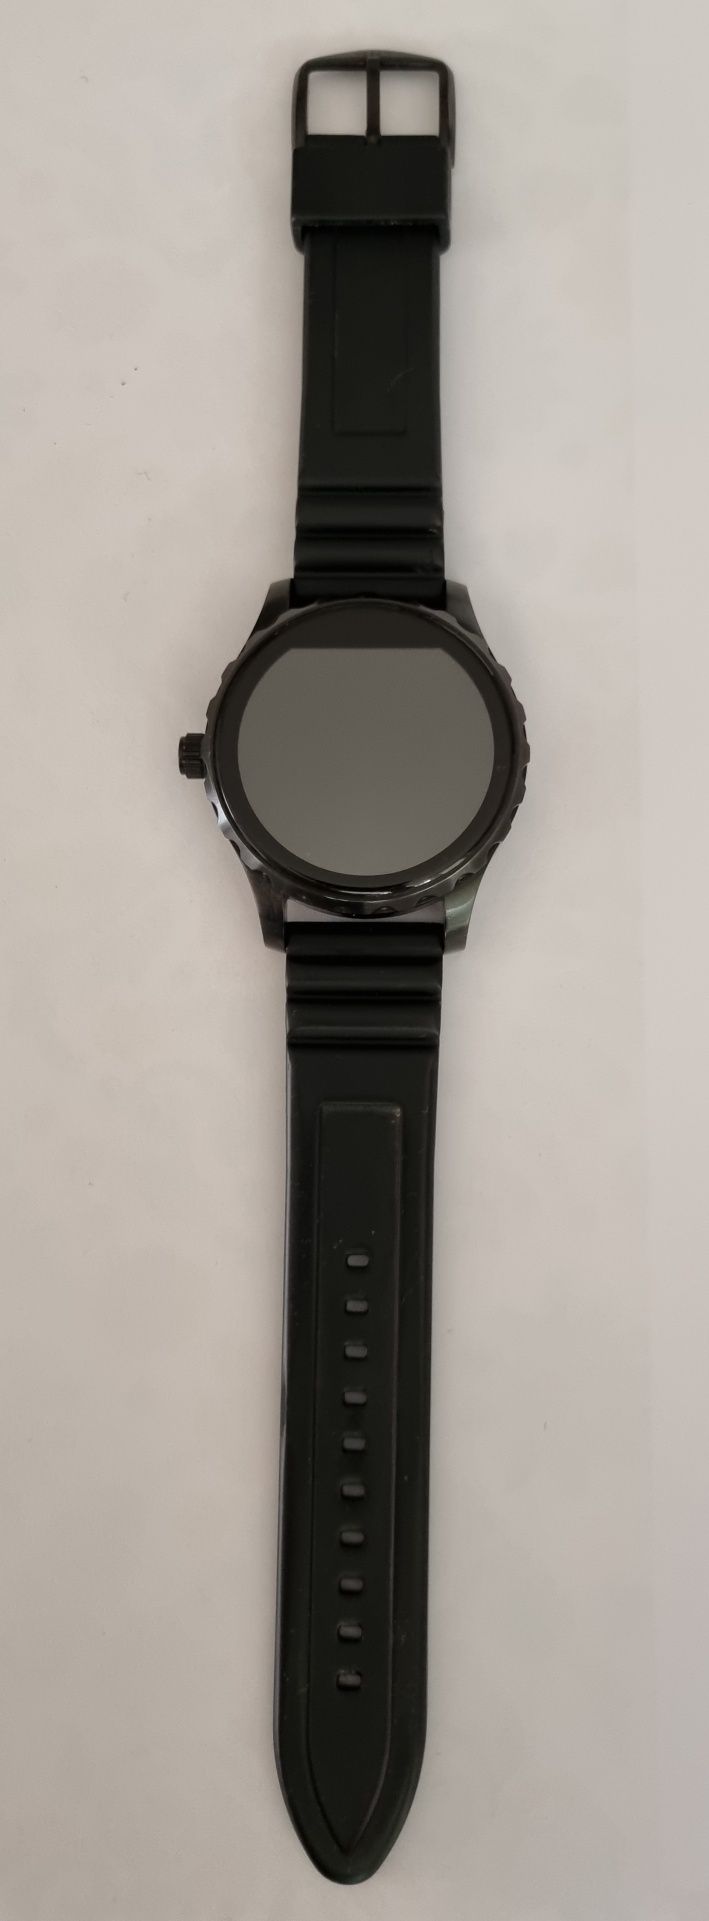 Smartwatch zegarek Fossil QMarshal FTW2107 męski